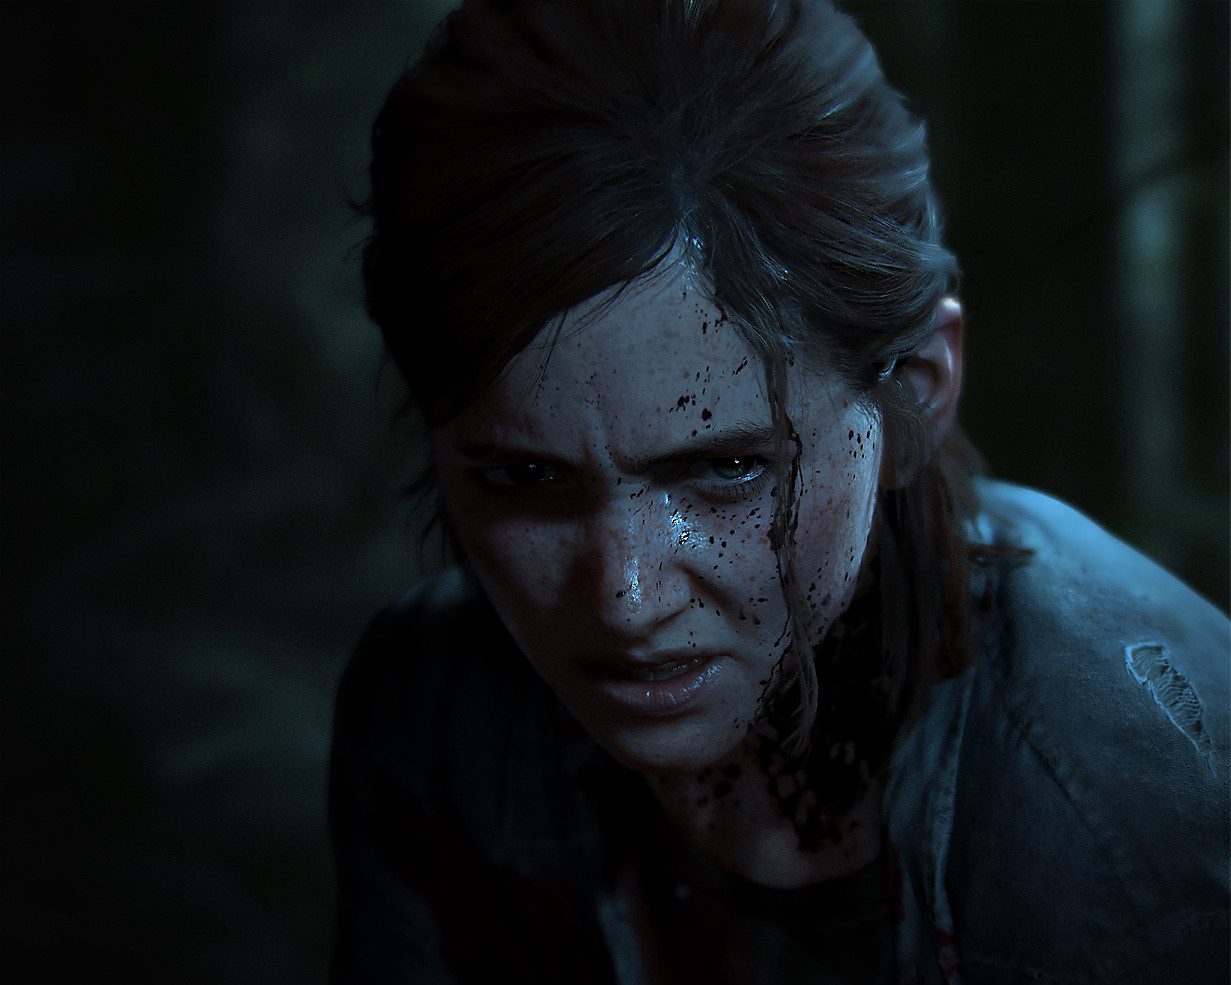 The Last of Us Part II - Ellie Outbreak Day 2018